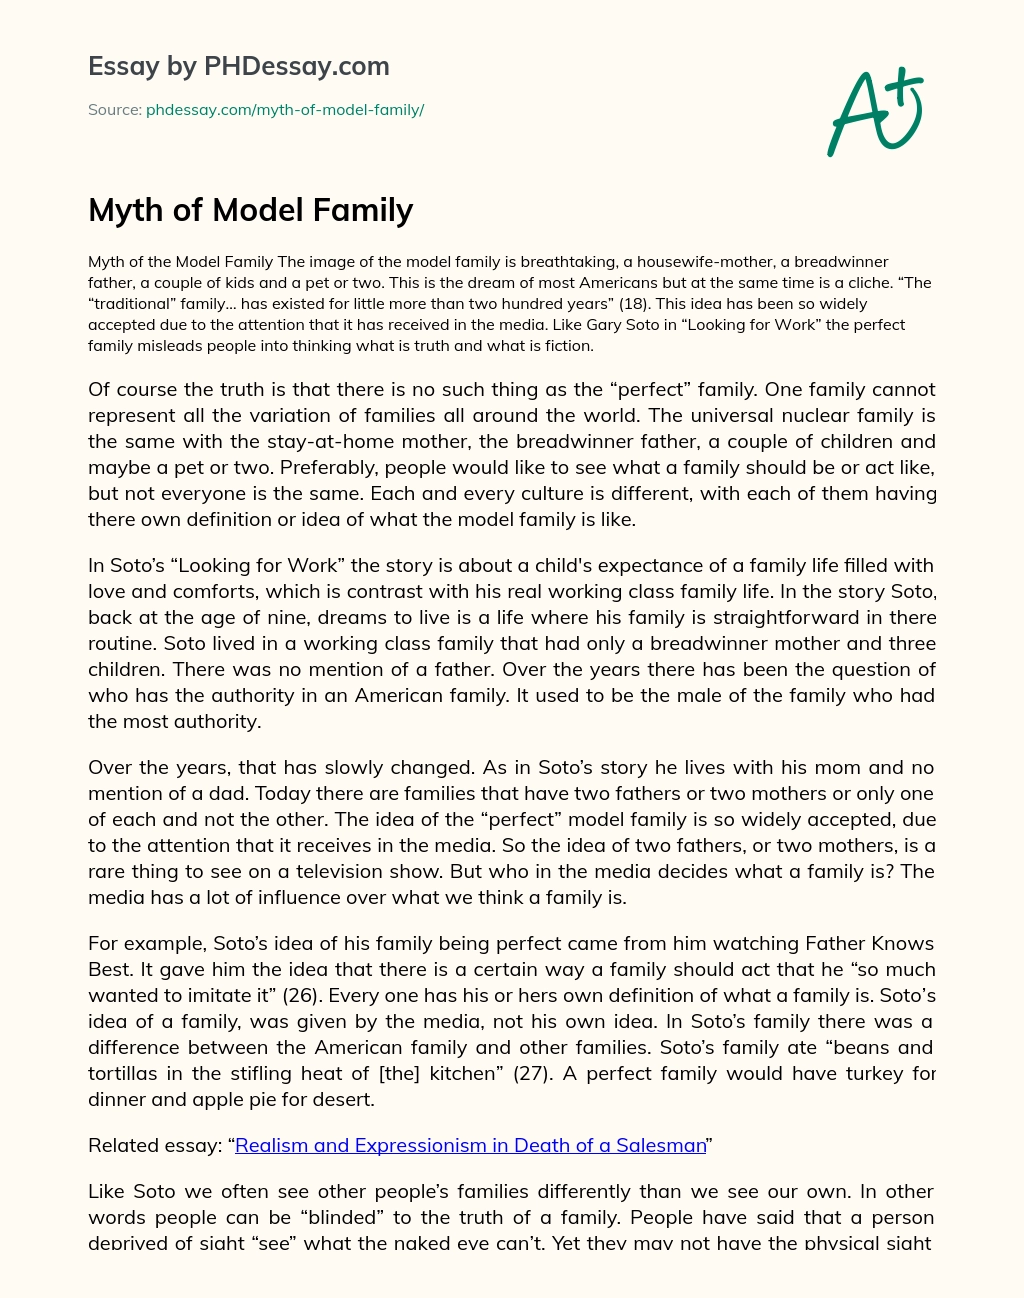 Myth of Model Family essay